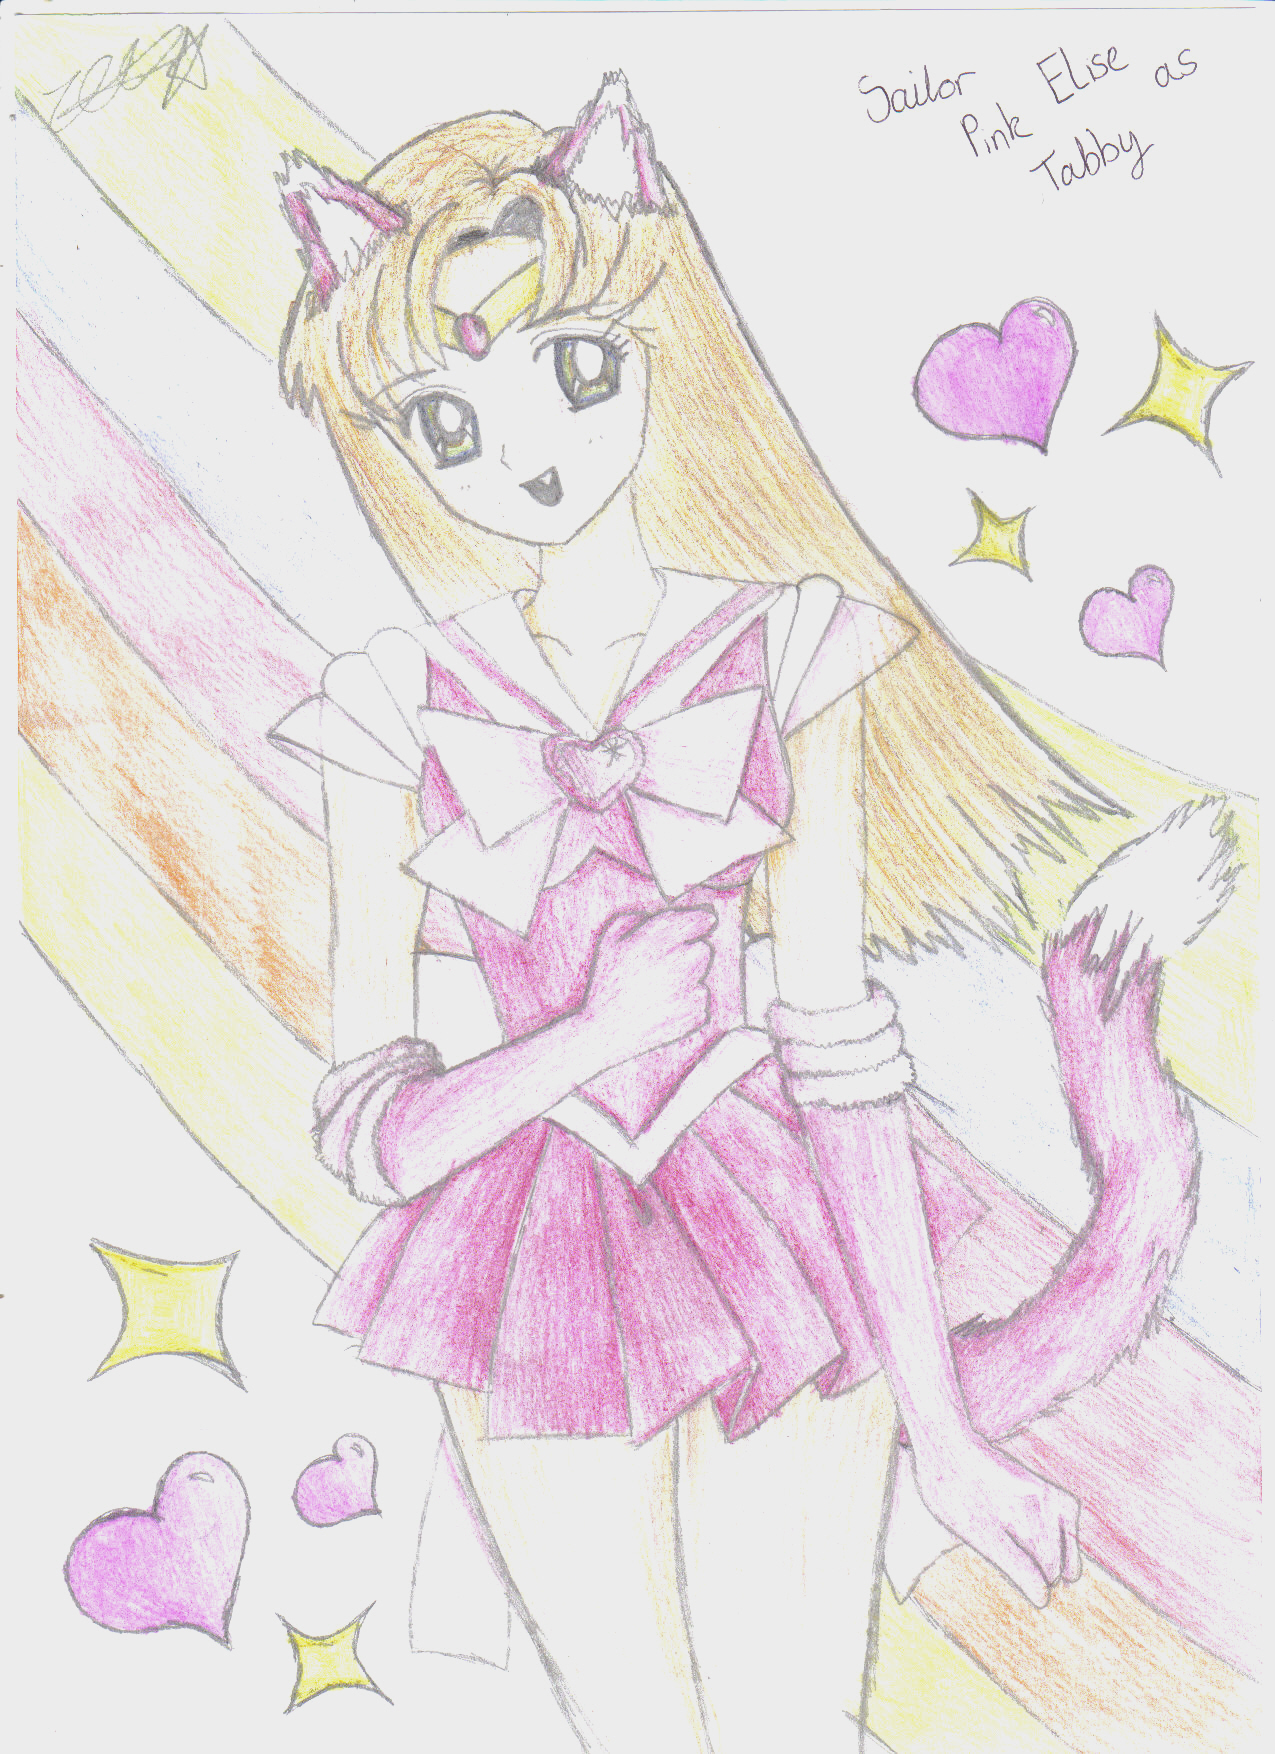 Elise as Sailor Pink Tabby by Cherryblossomfairy